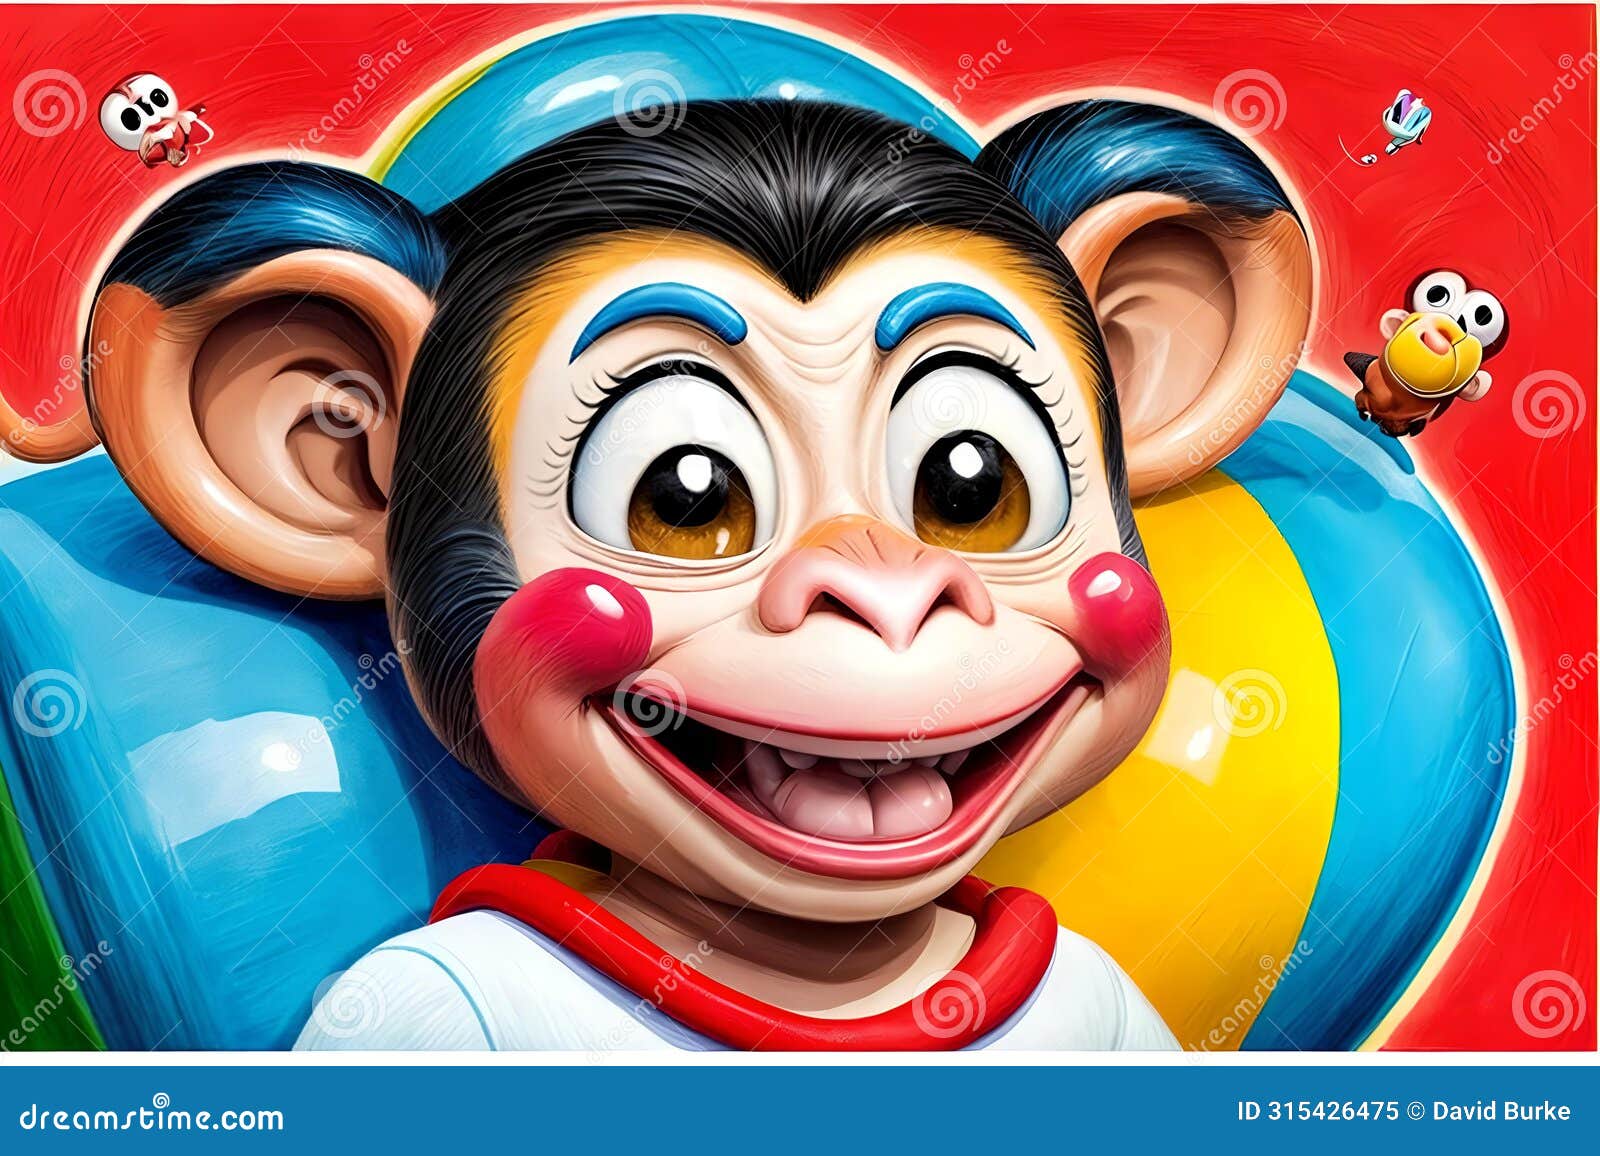 cartoon comic smile furry fun face carnival circus clown child play